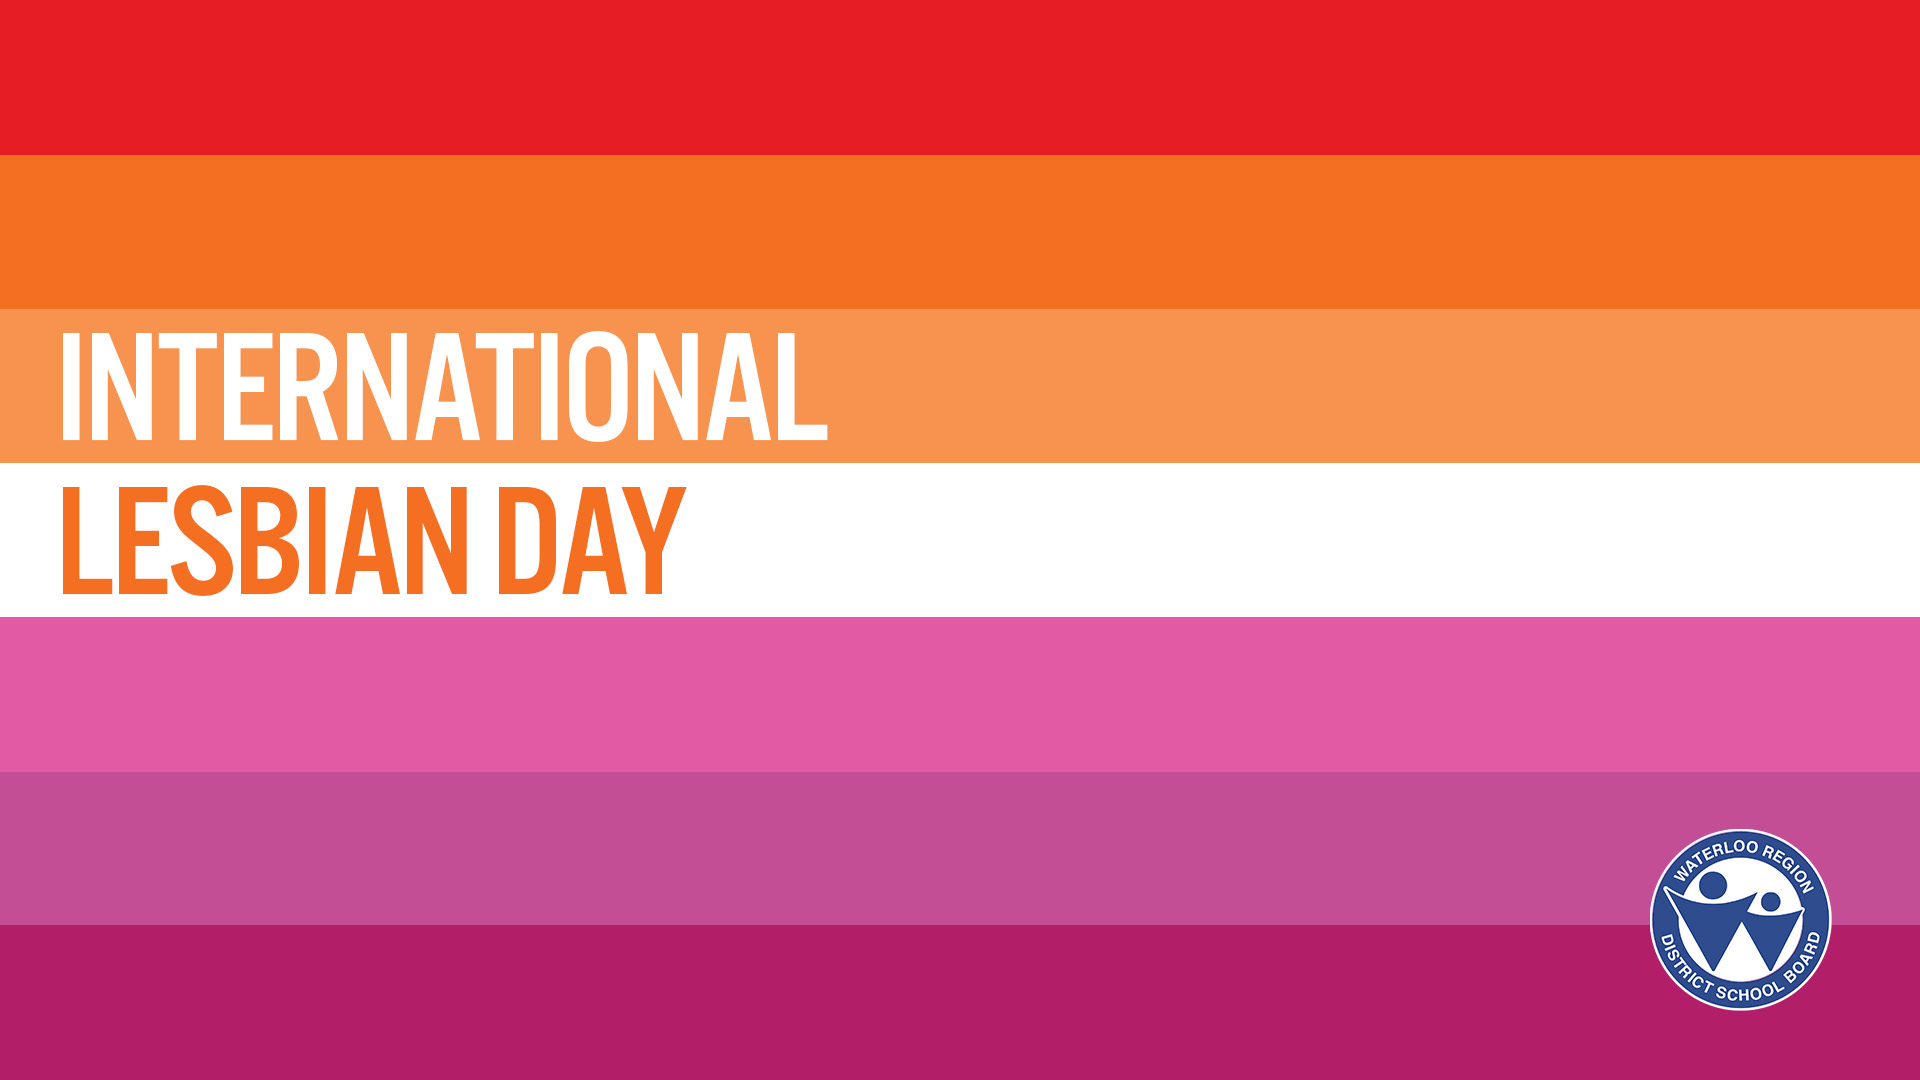 International Lesbian Day